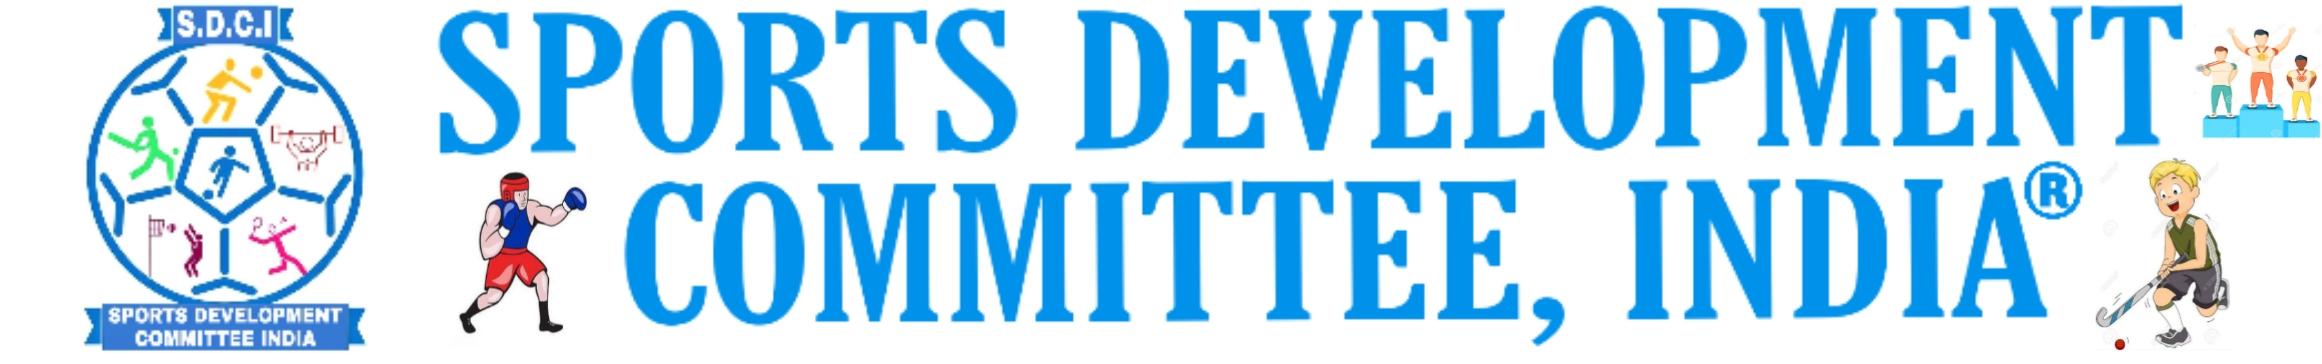 sport-development-commitiee-india-logo